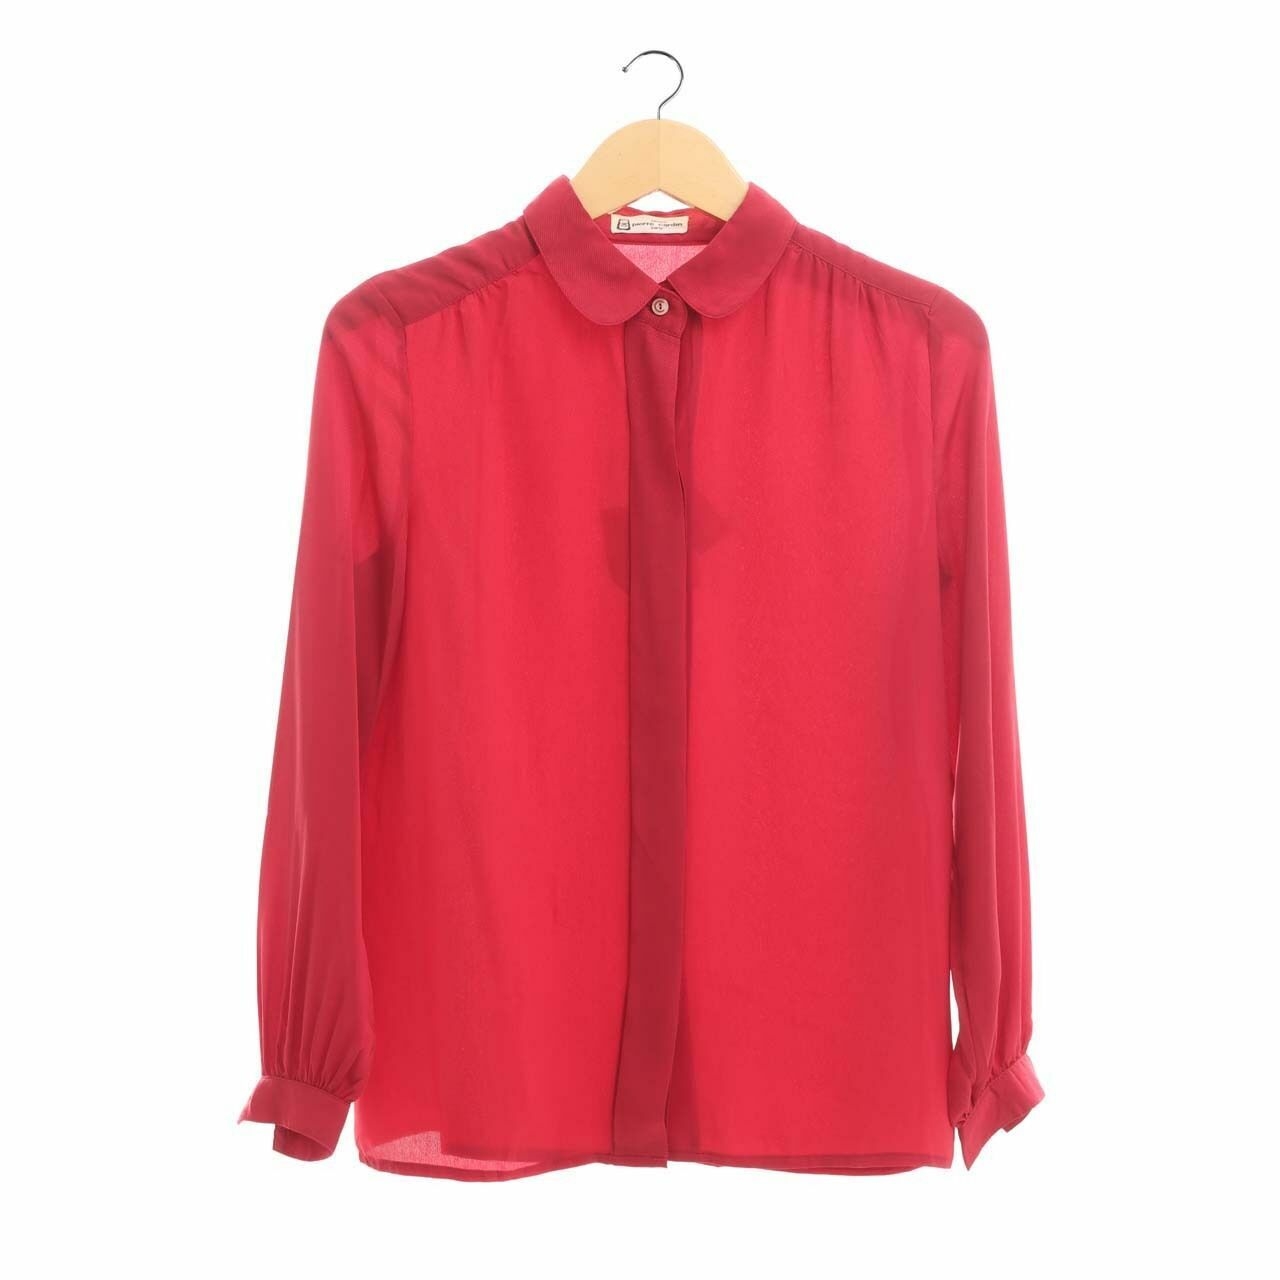 Pierre Cardin Red Shirt